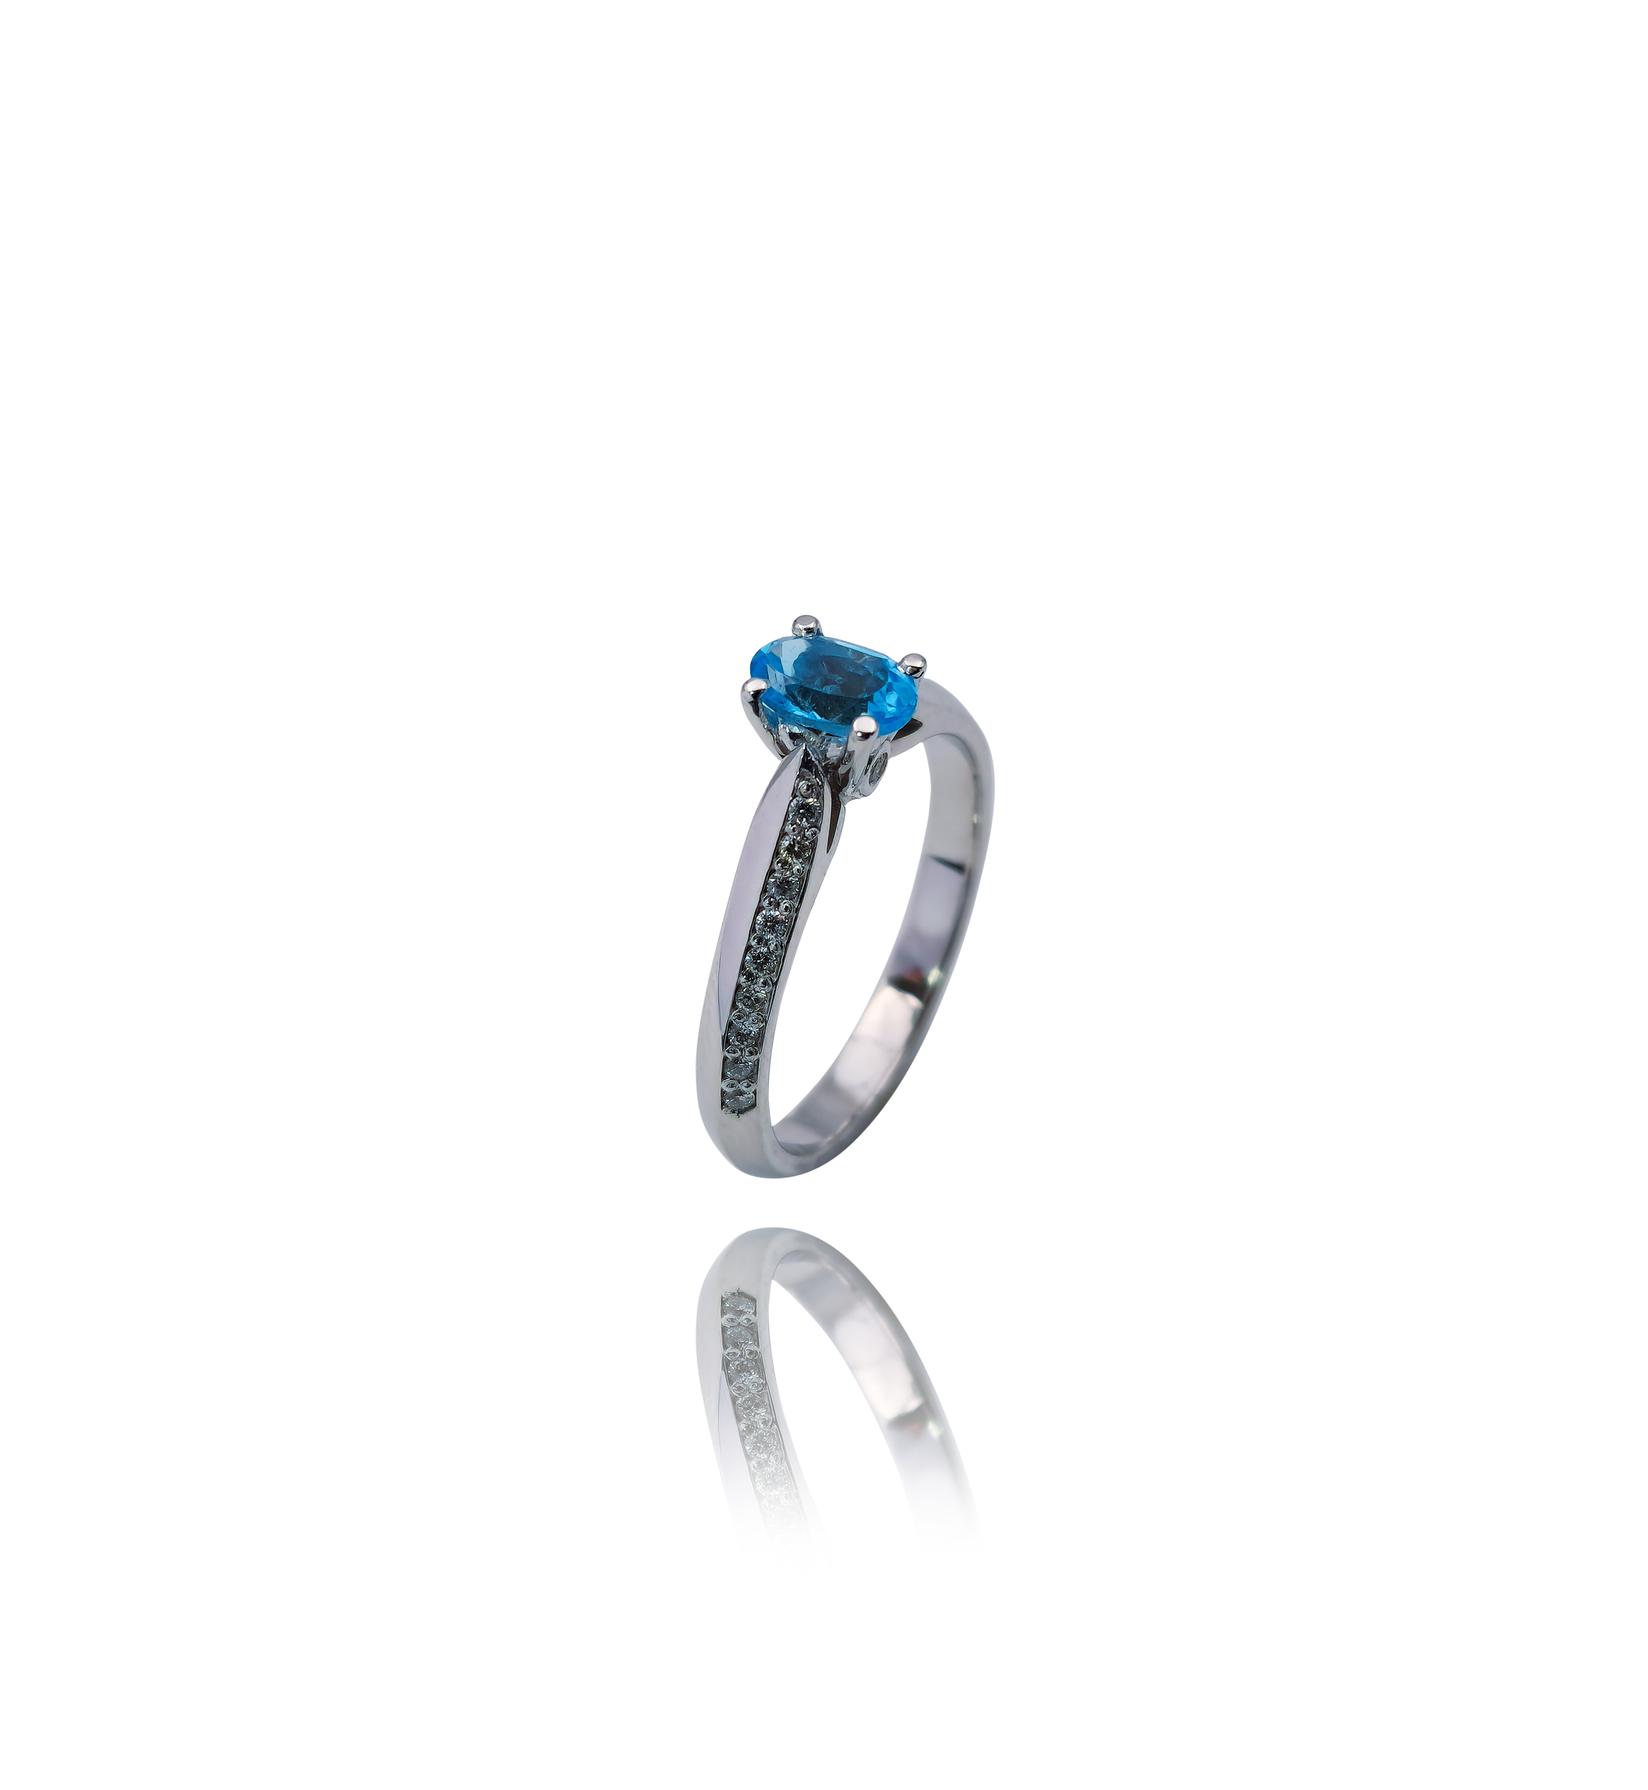 Selected image for Ženski prsten od Belog zlata sa Brilijantima i Swiss blue topazom, 585, 12mm